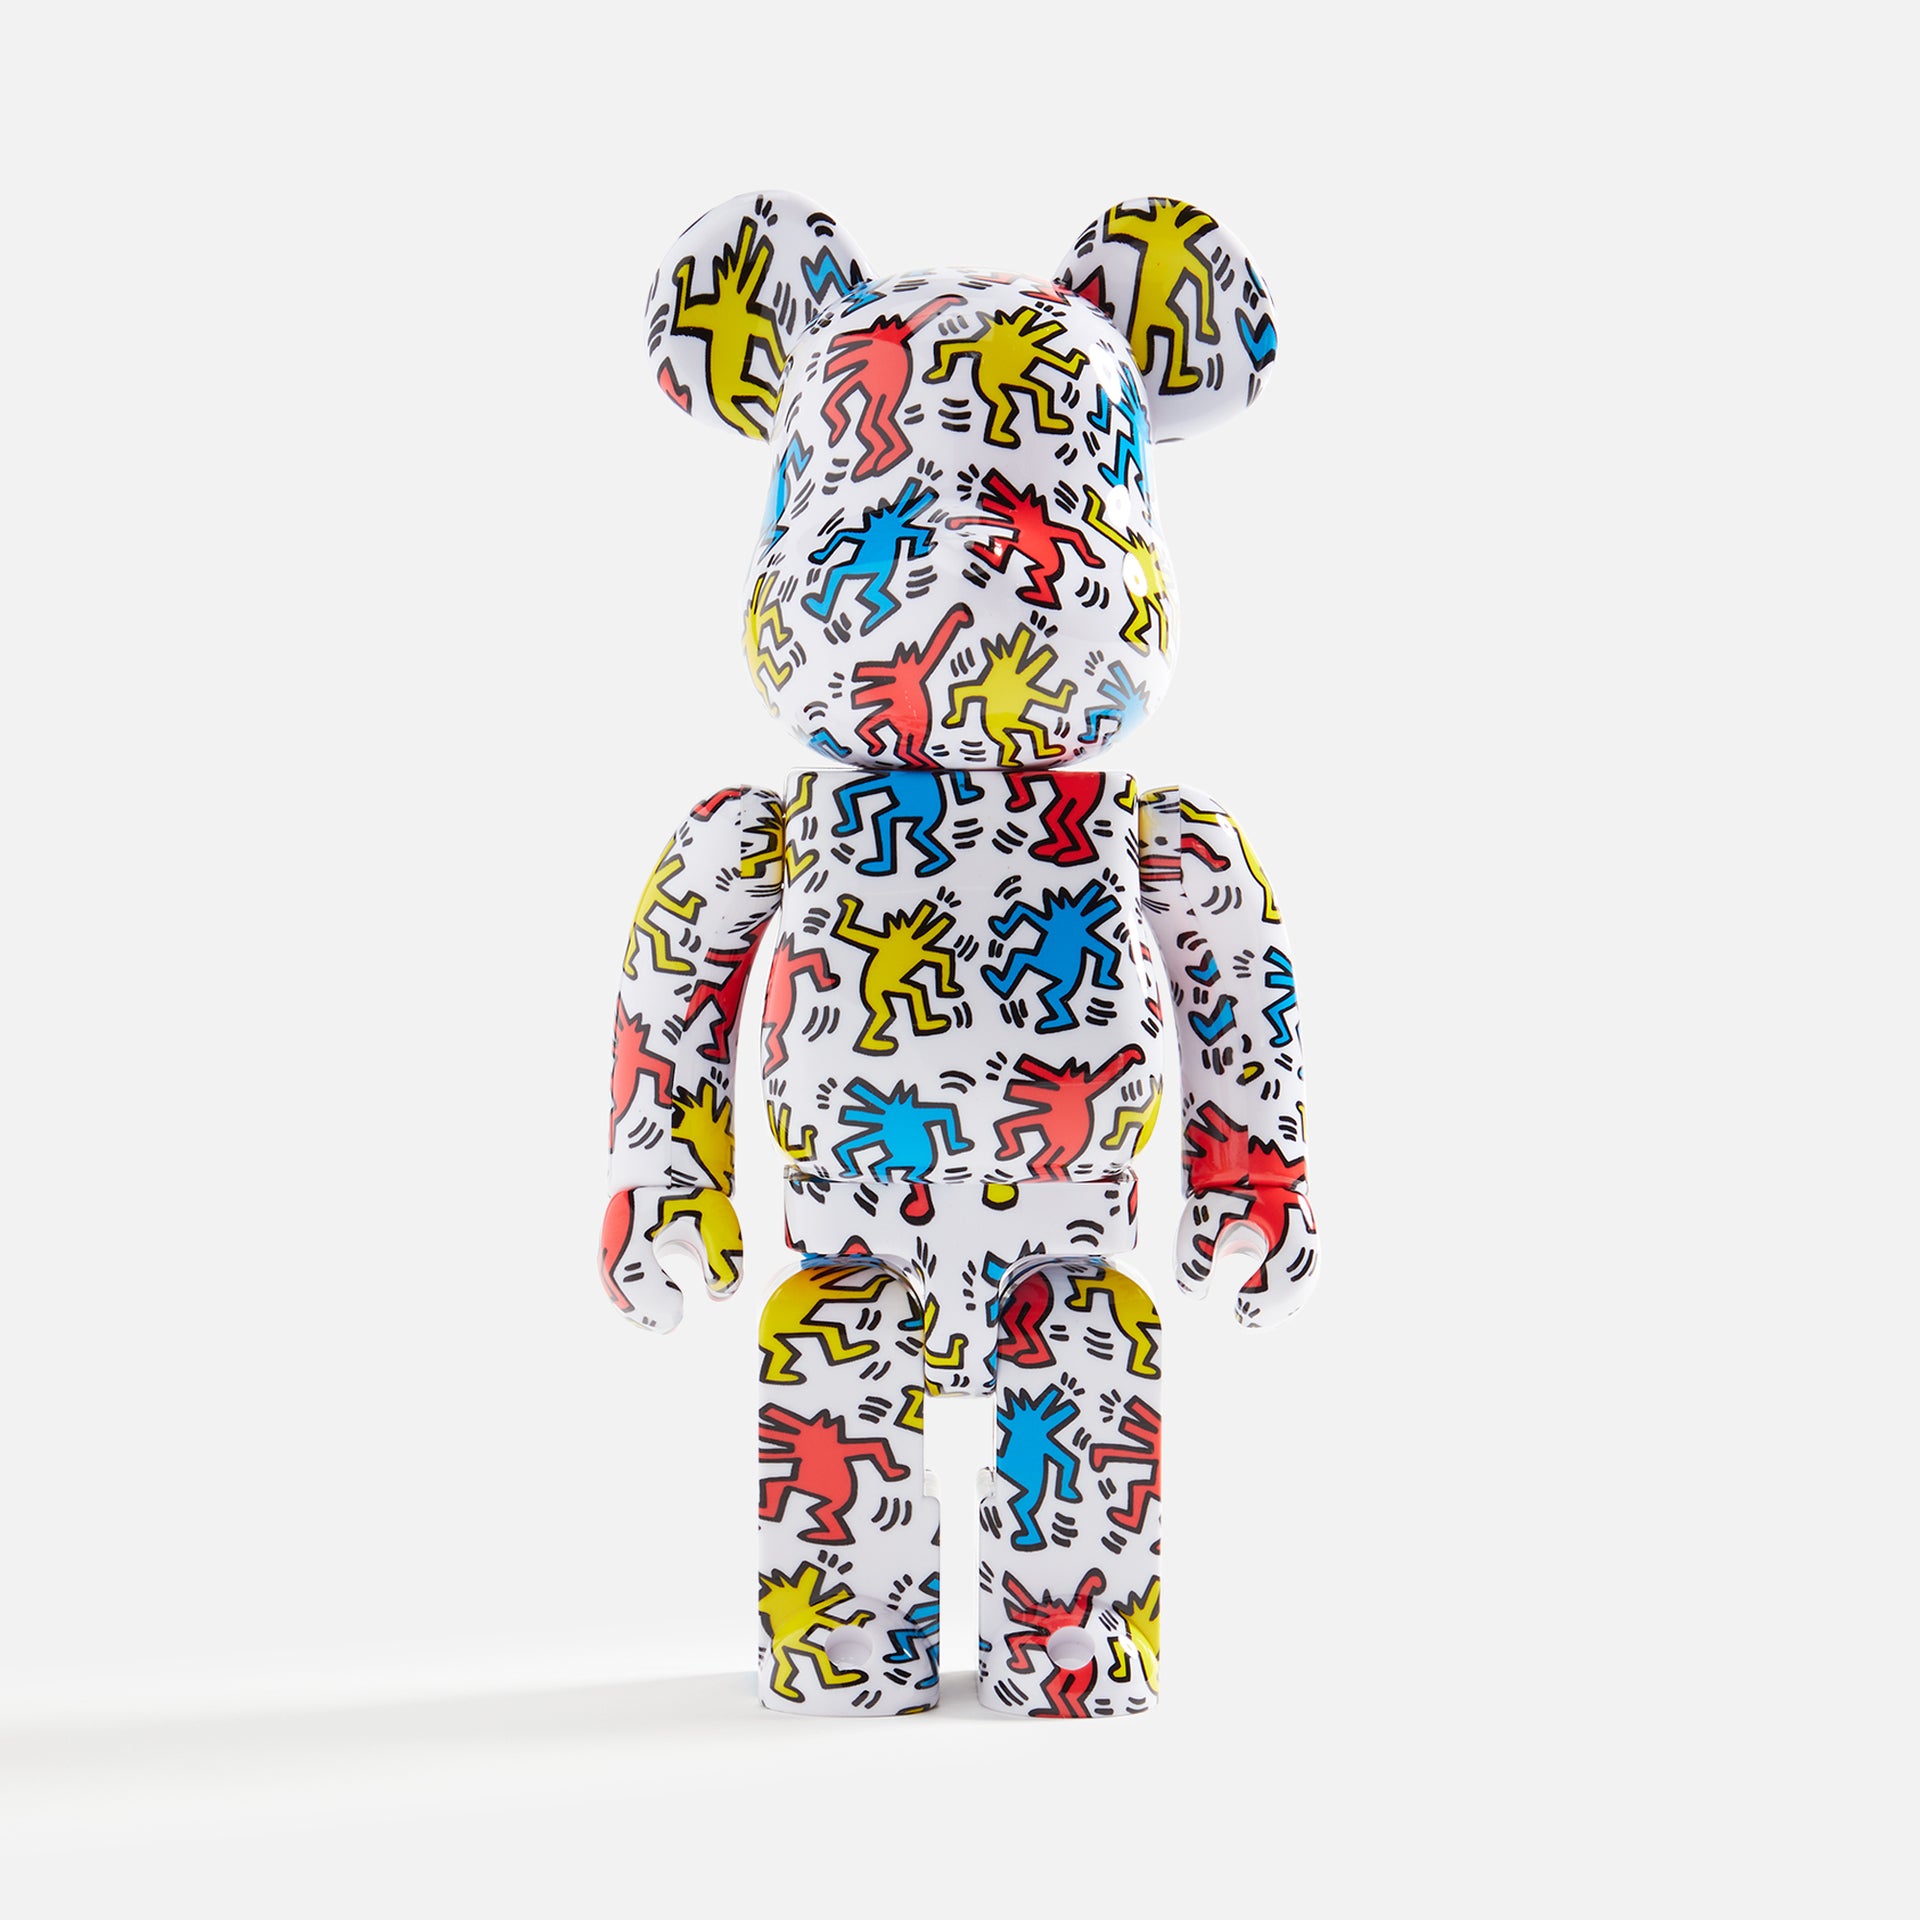 Medicom Toy BE@RBRICK Keith Haring #9 1000%